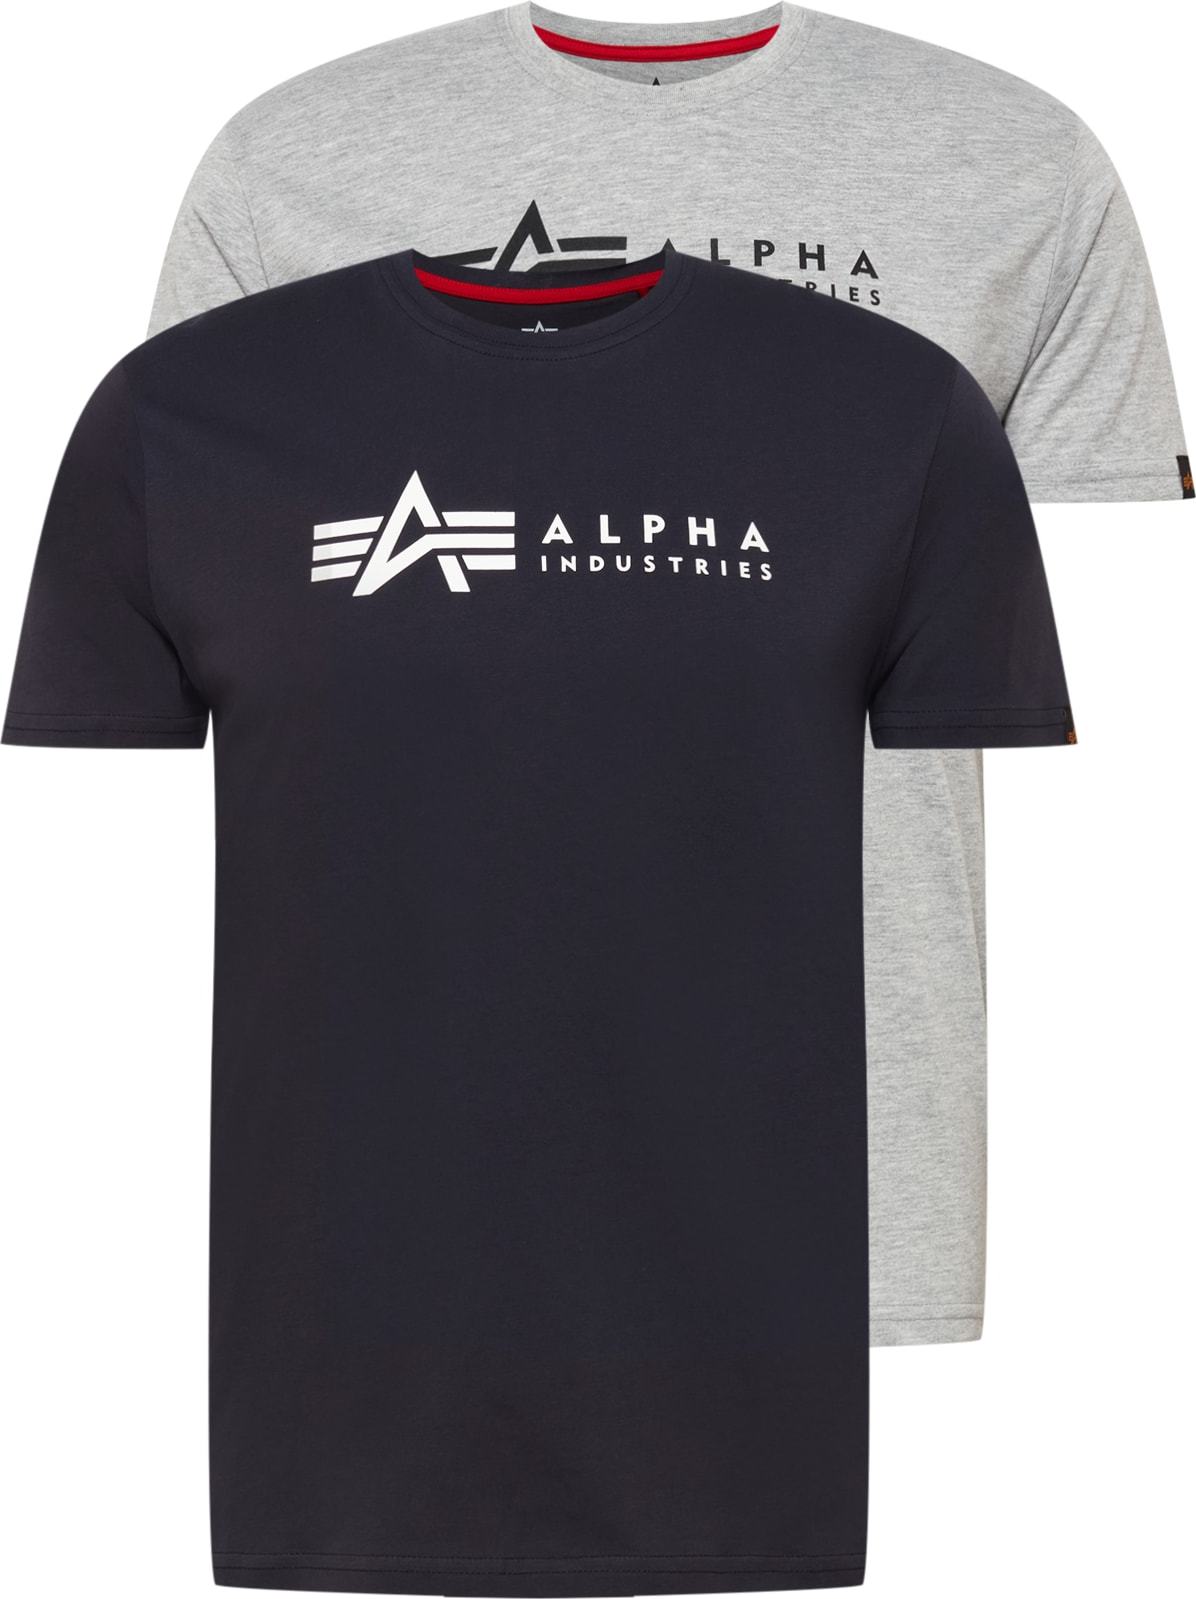 Tričko alpha industries námořnická modř / šedý melír / černá / bílá